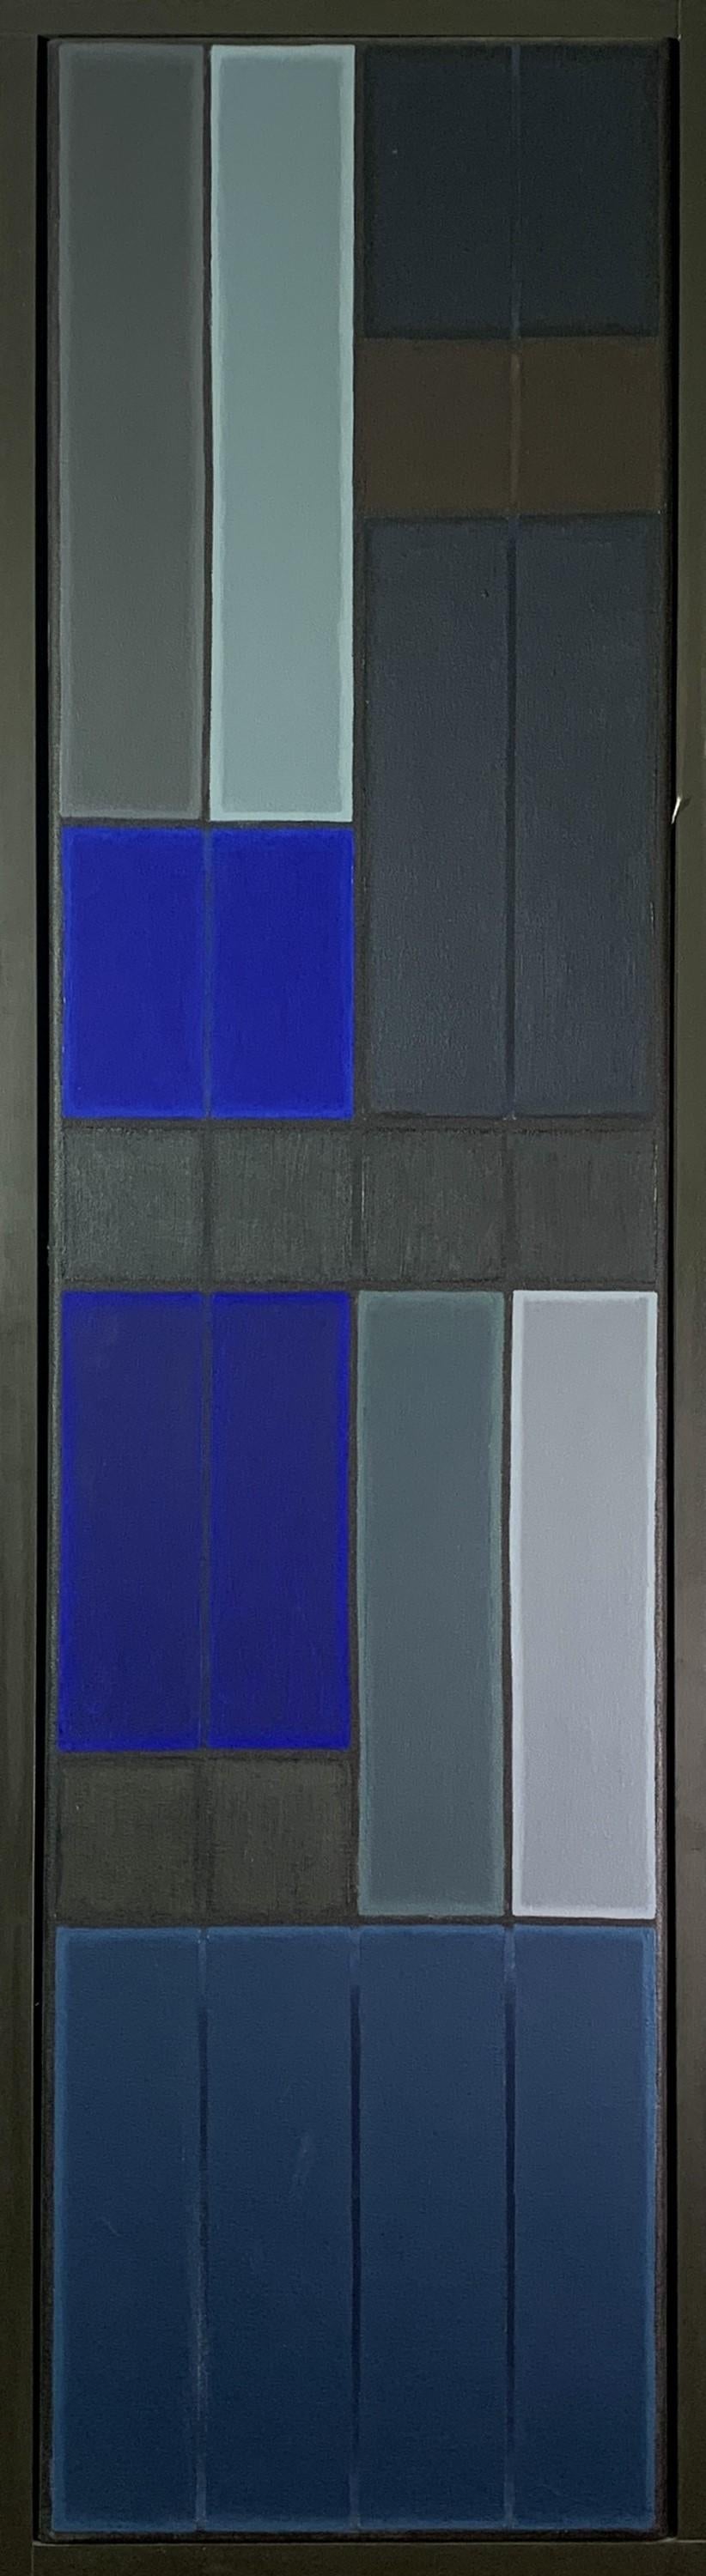 John Hopwood Abstract Painting – Ohne Titel Blaue abstrakte Nummer 2.  Geometrisches Ölgemälde